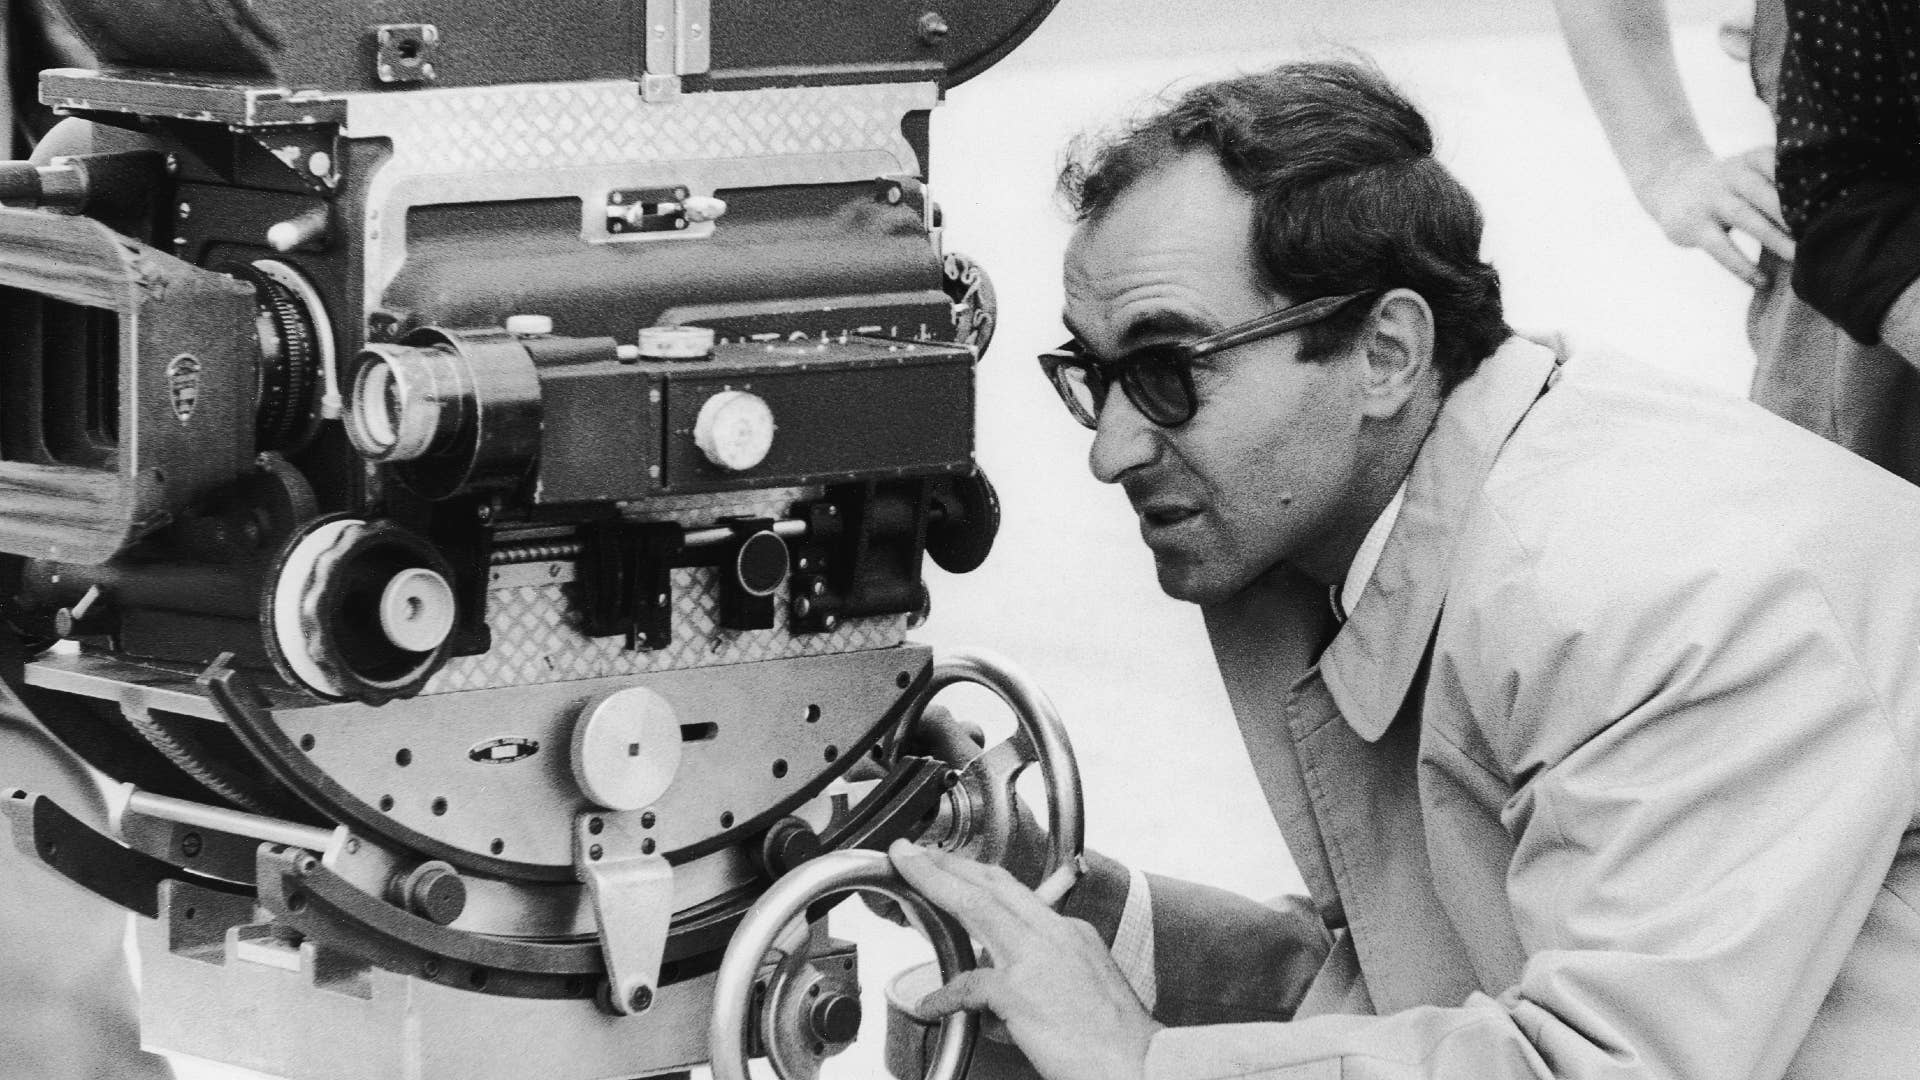 Director Jean Luc Godard is seen behind the camera